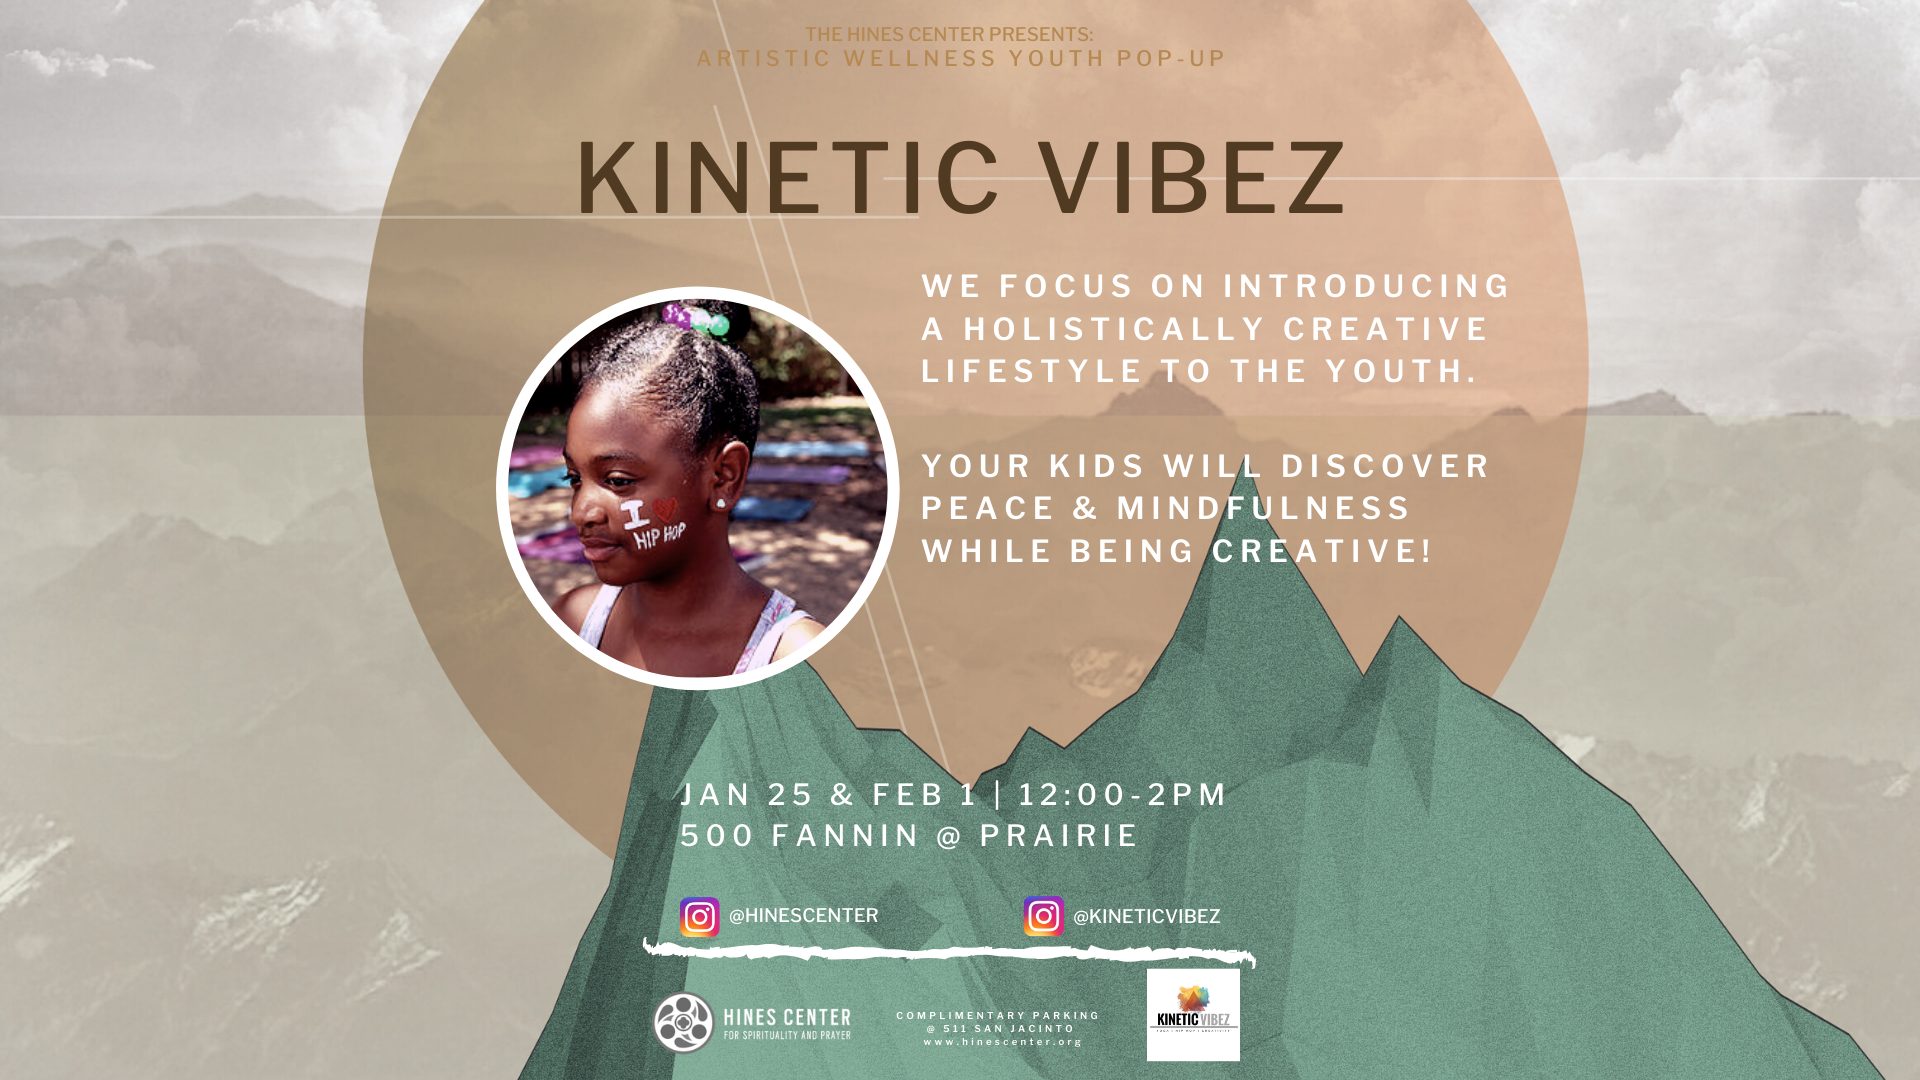 Kinetic Vibez: Artistic Wellness Youth Pop-Up